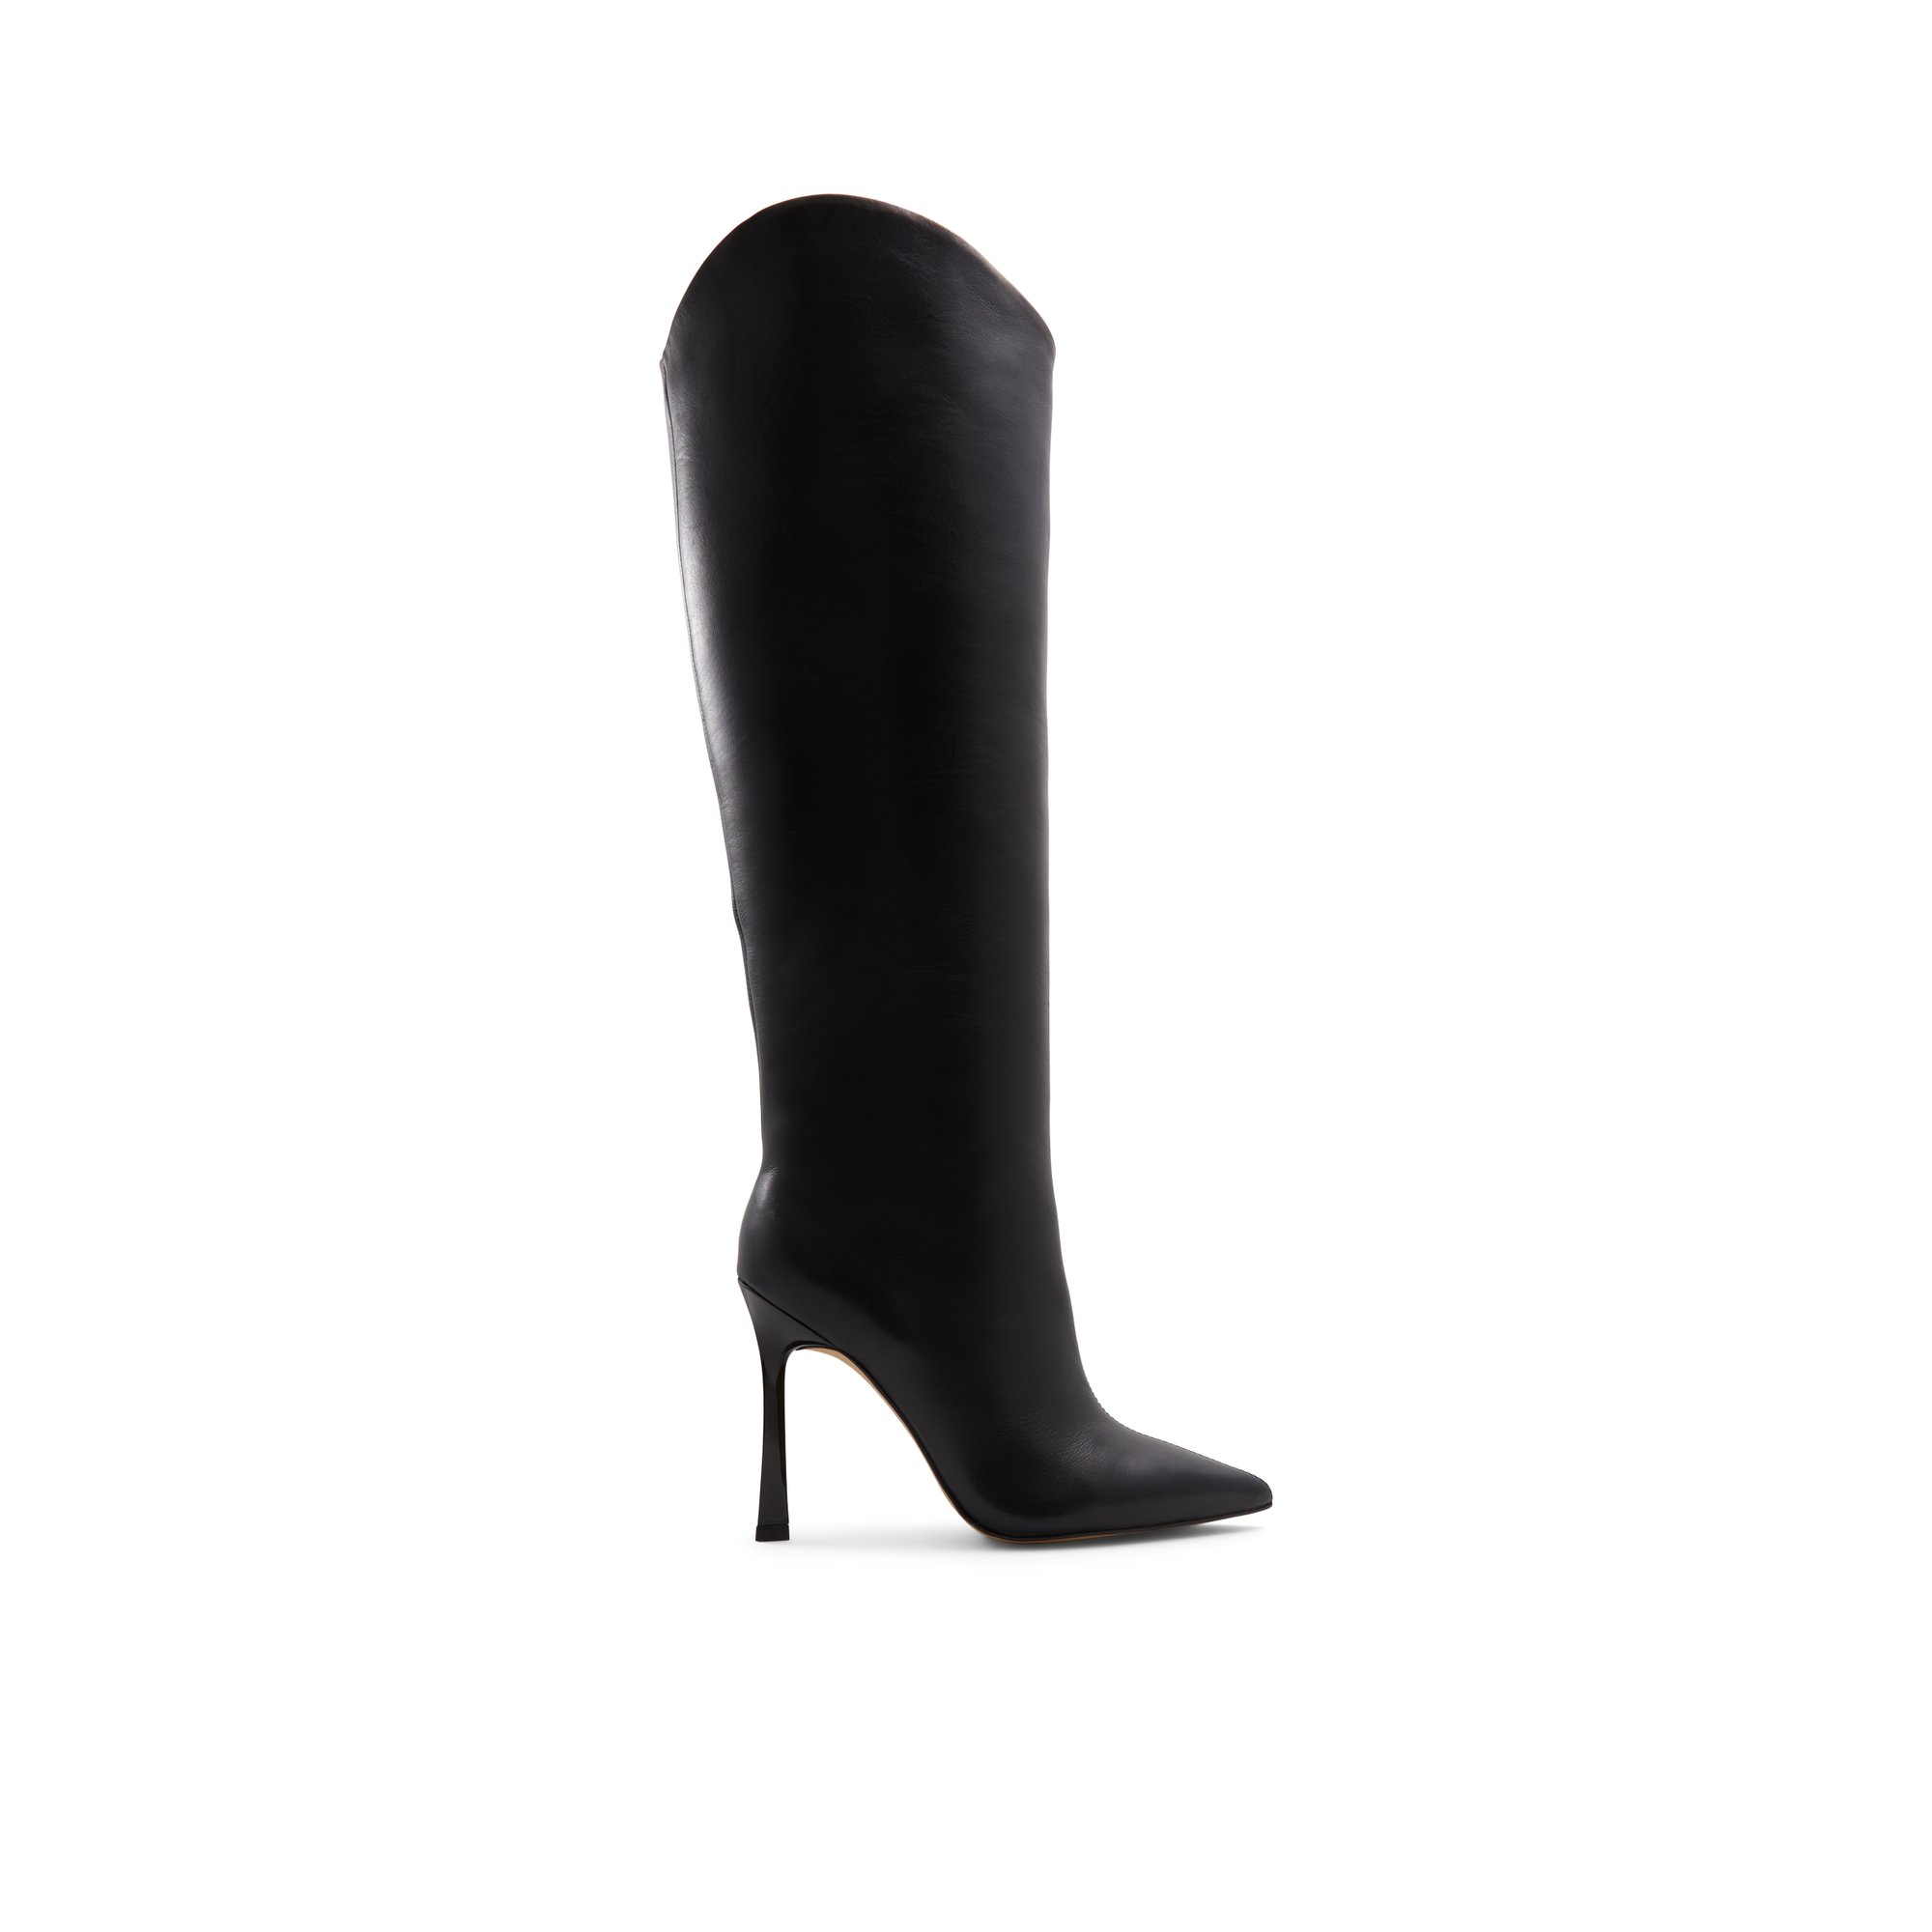 ALDO Devondra - Women's Dress Boot - Black